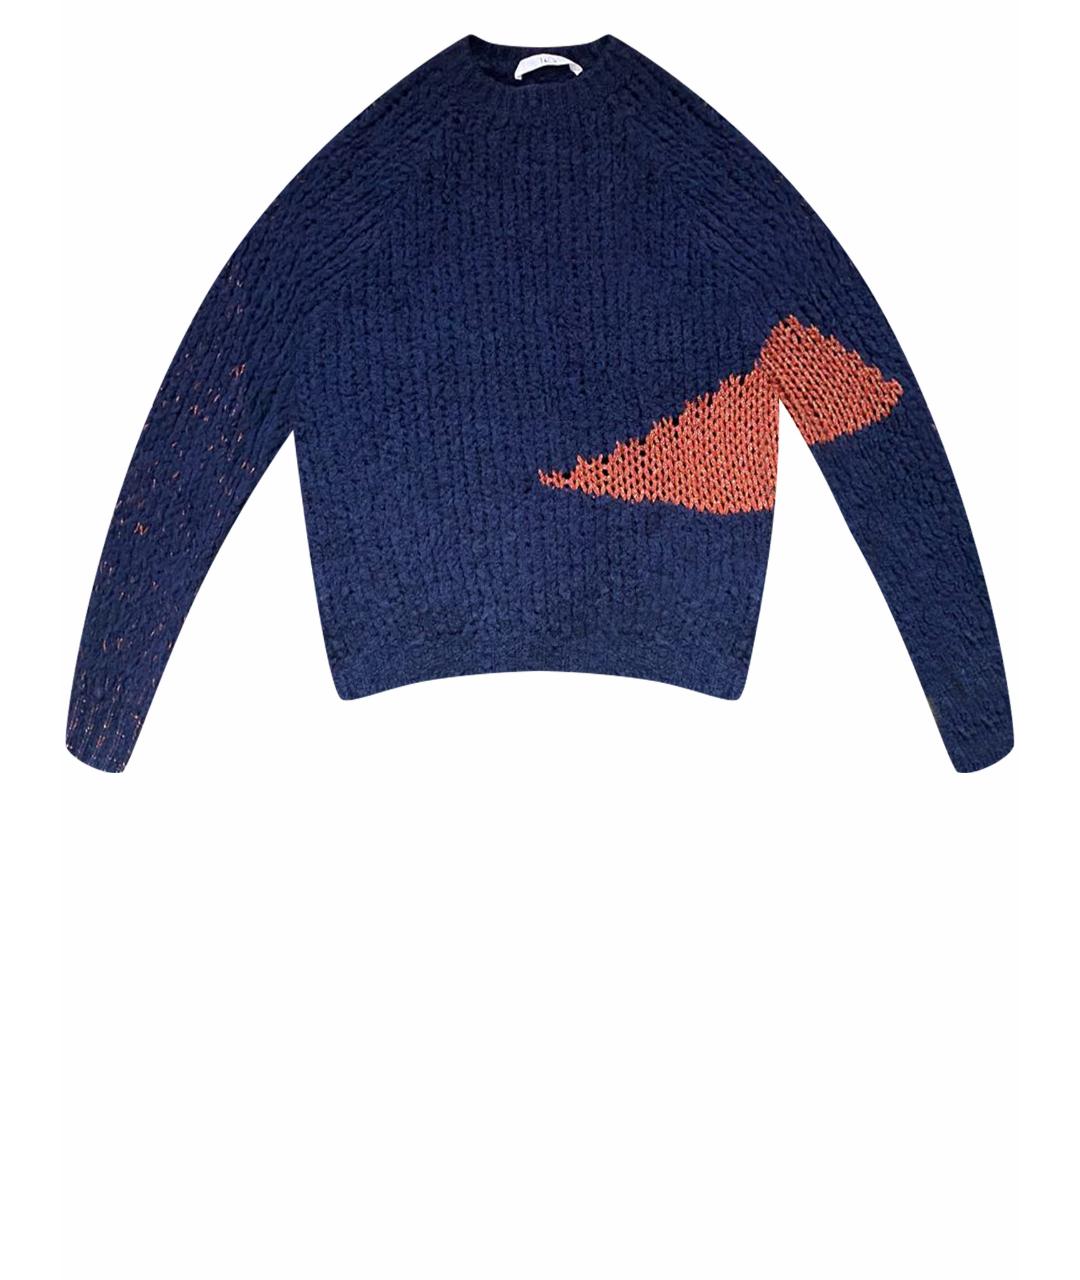 TELA Темно-синий джемпер / свитер, фото 1